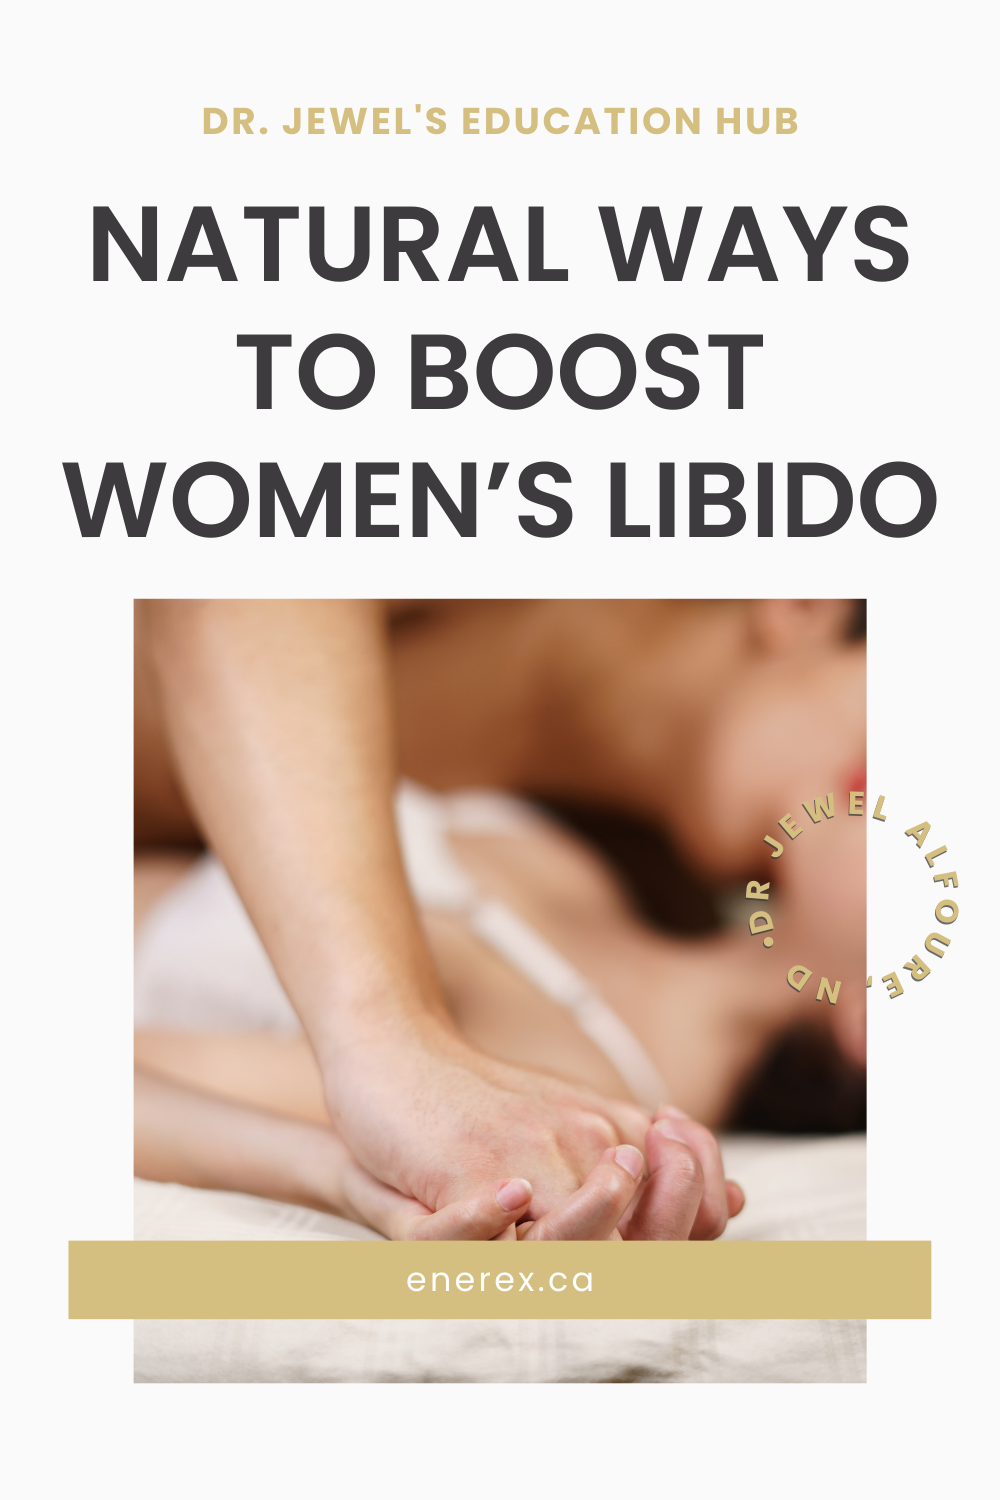 Natural Ways to Boost Women's Libido: The Blue Pill for Women